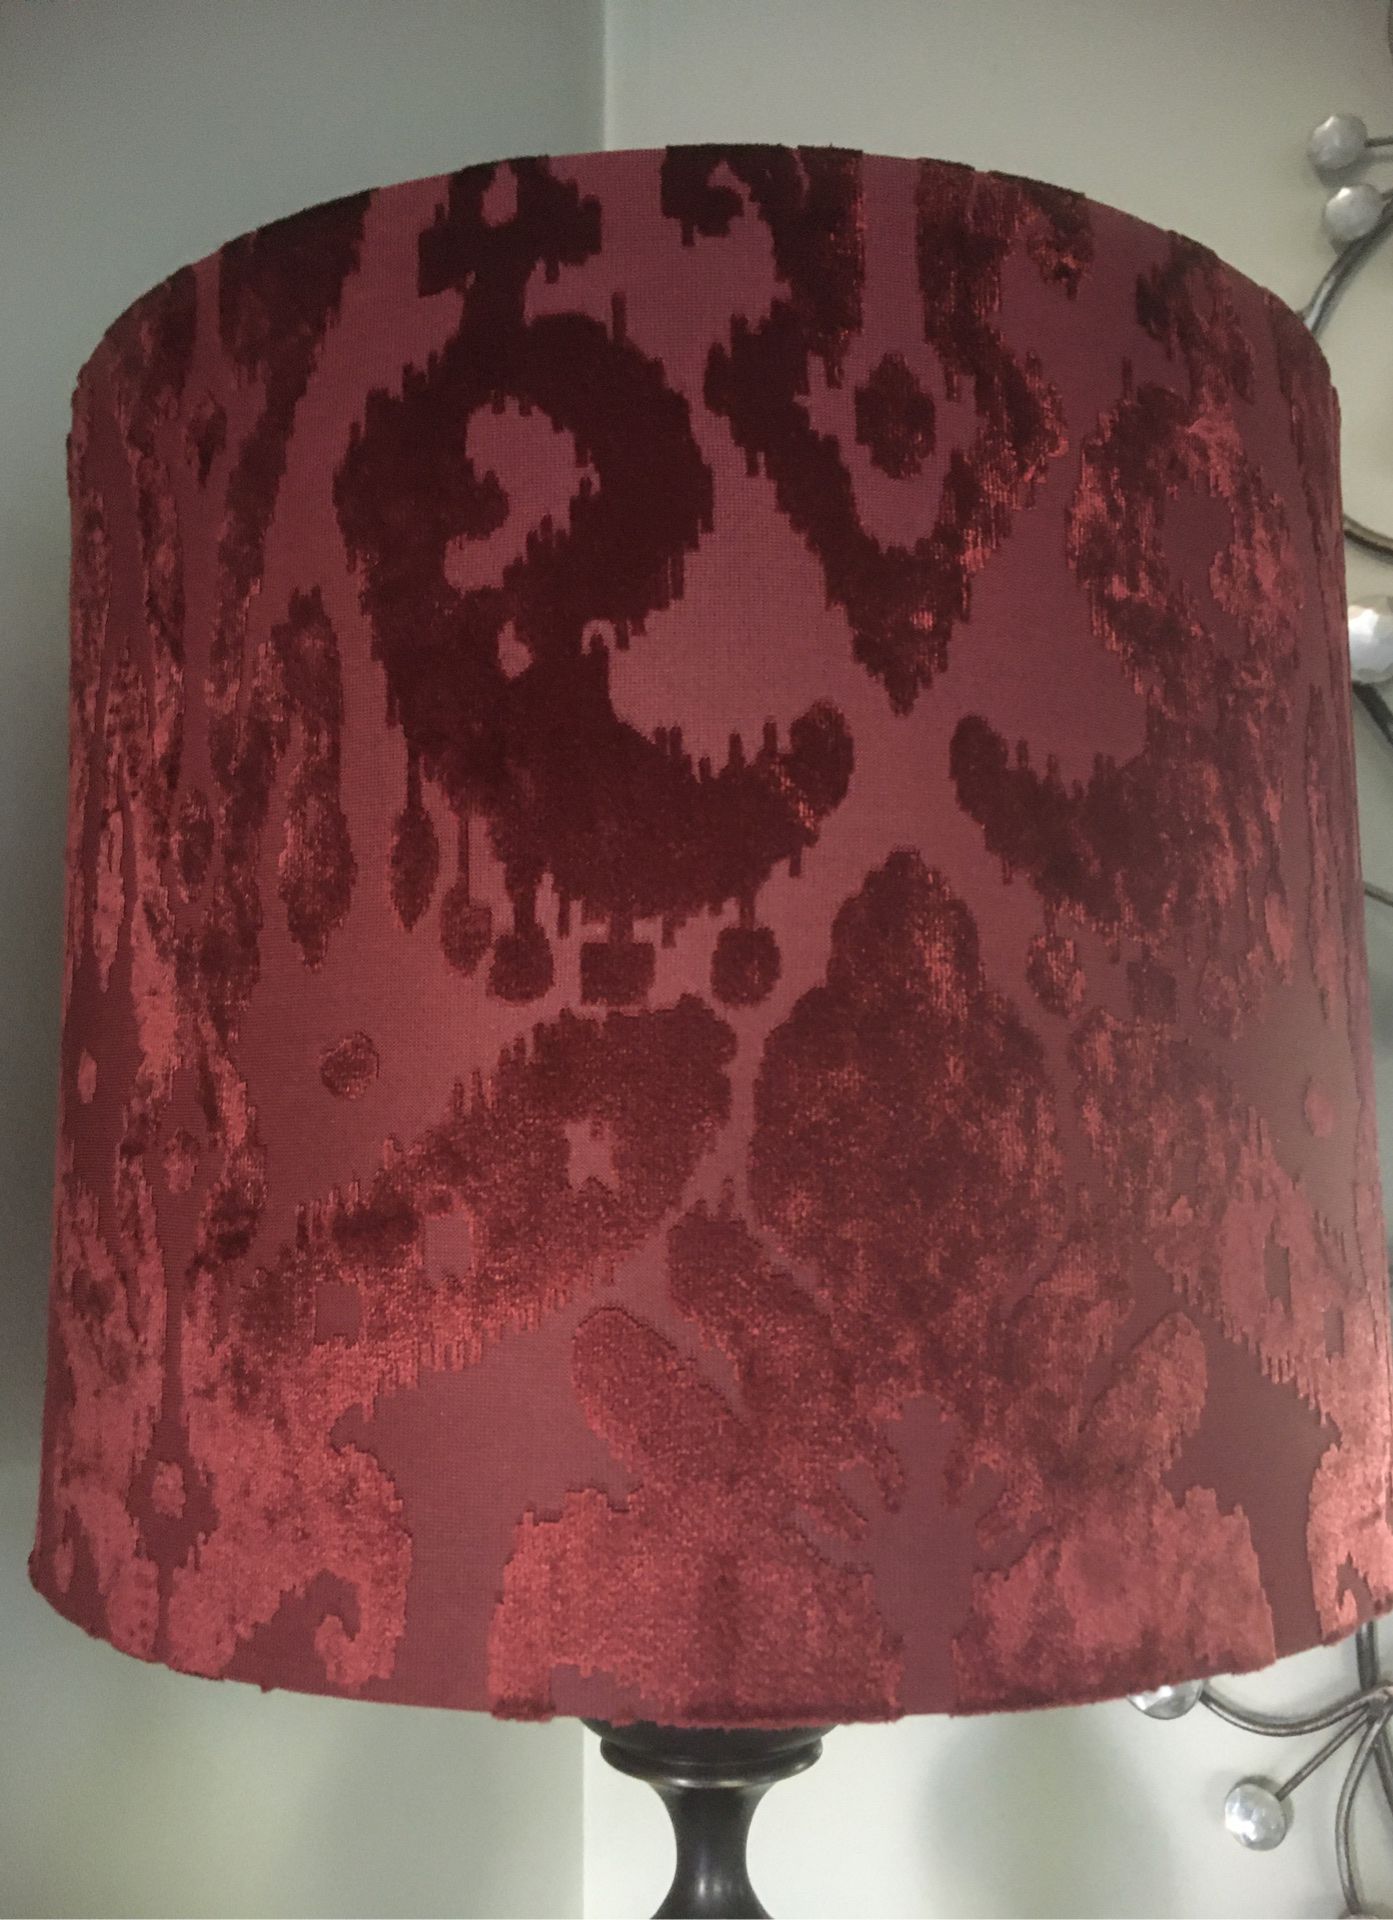 Beautiful lamp with velvet burgundy shade